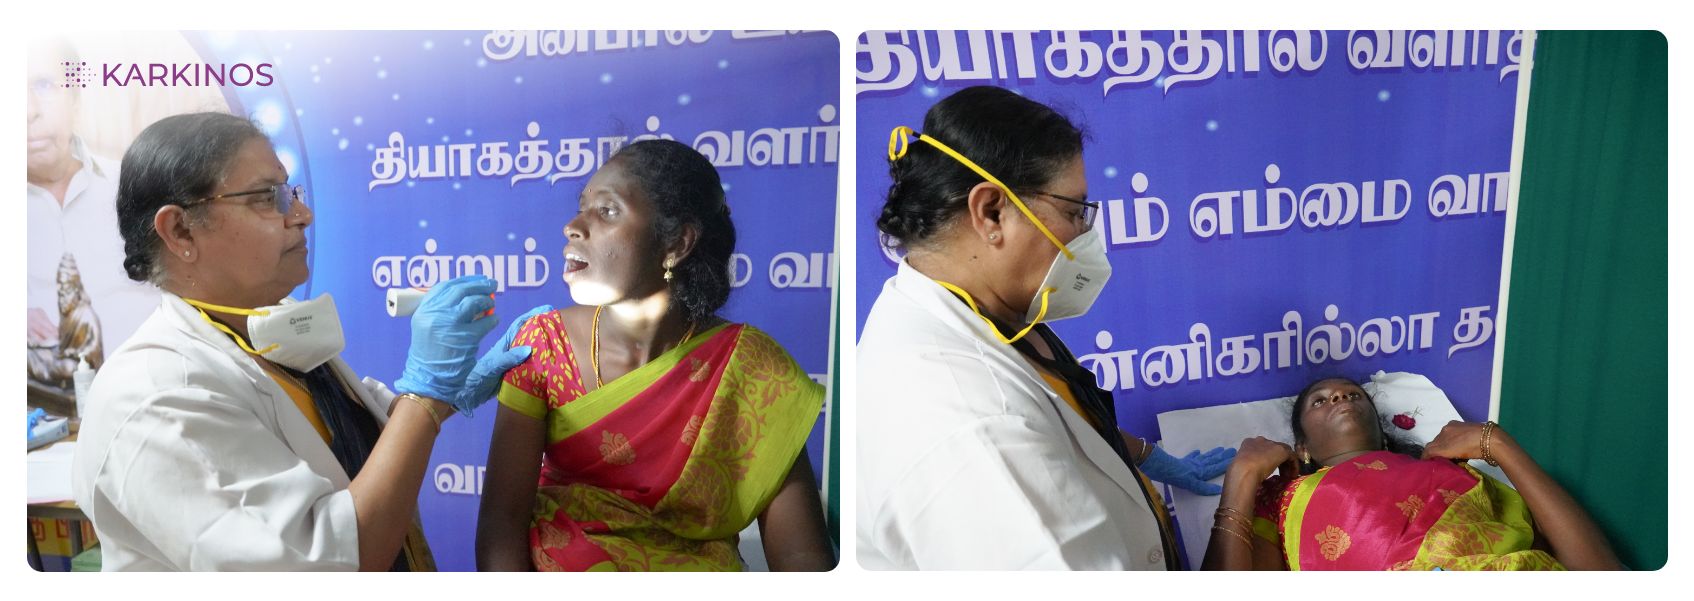 IVDP Krishnagiri oral cancer screening